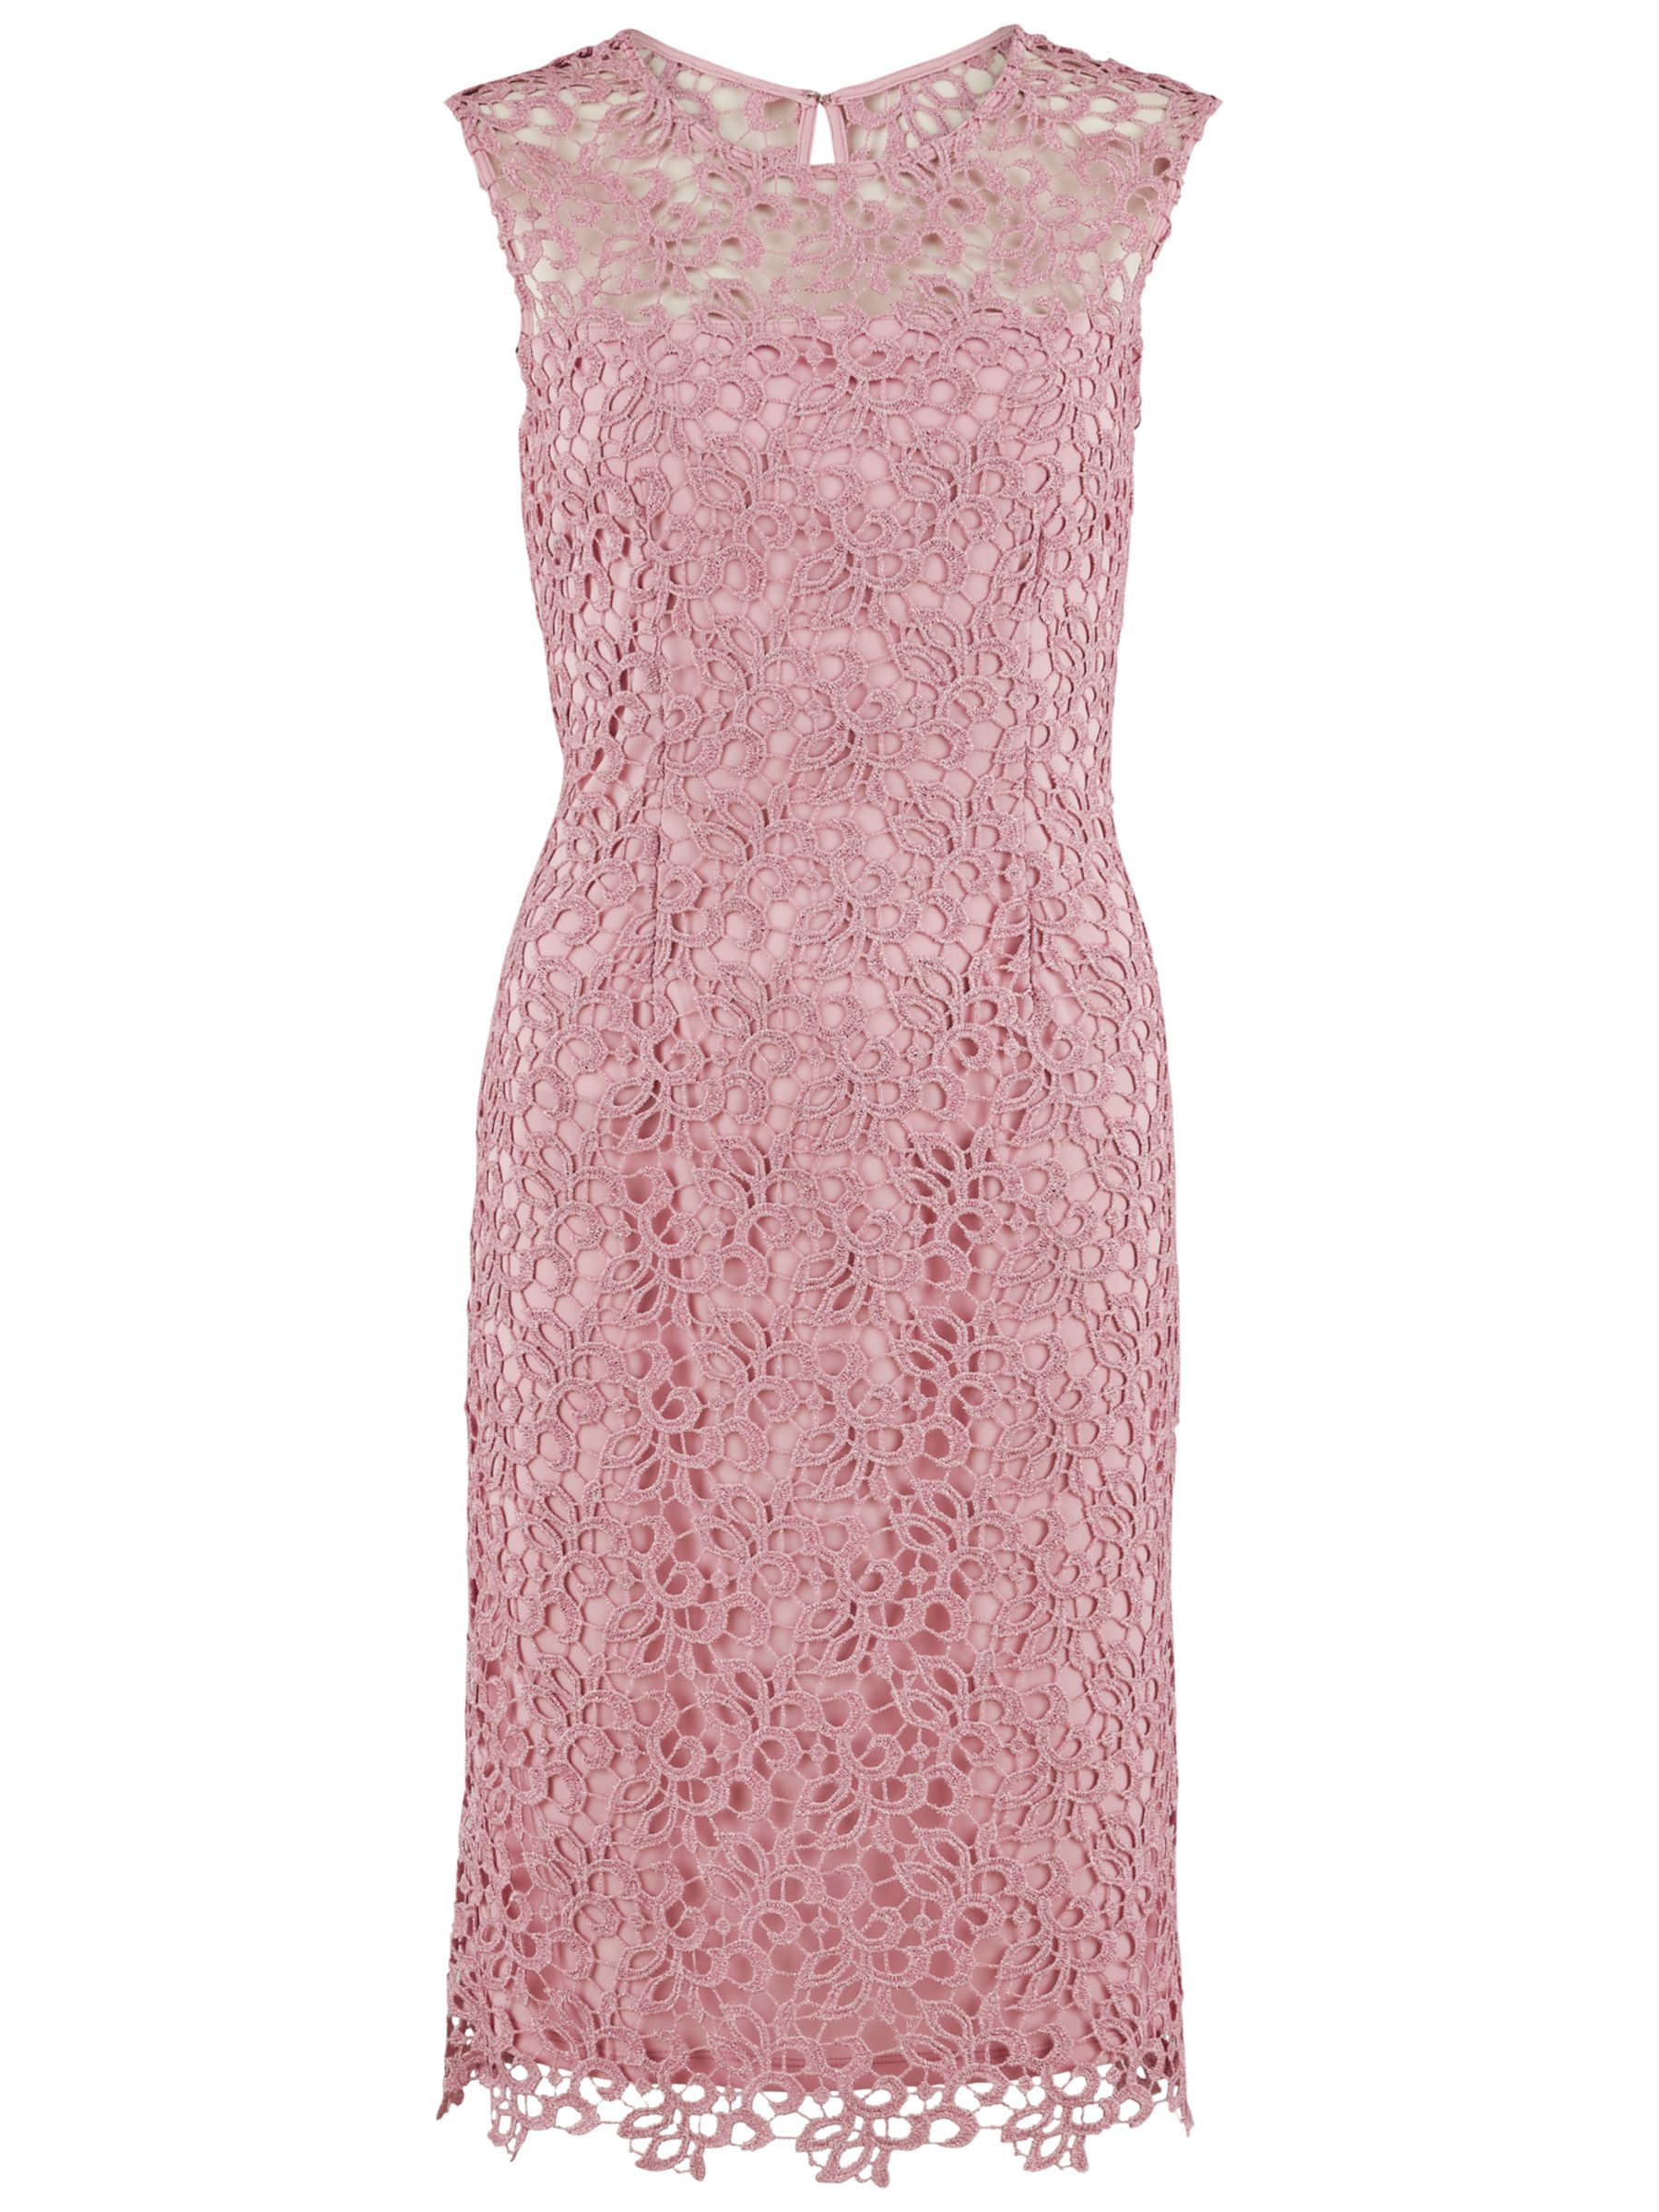 Gina Bacconi Metallic Guipure Dress, Pink at John Lewis & Partners